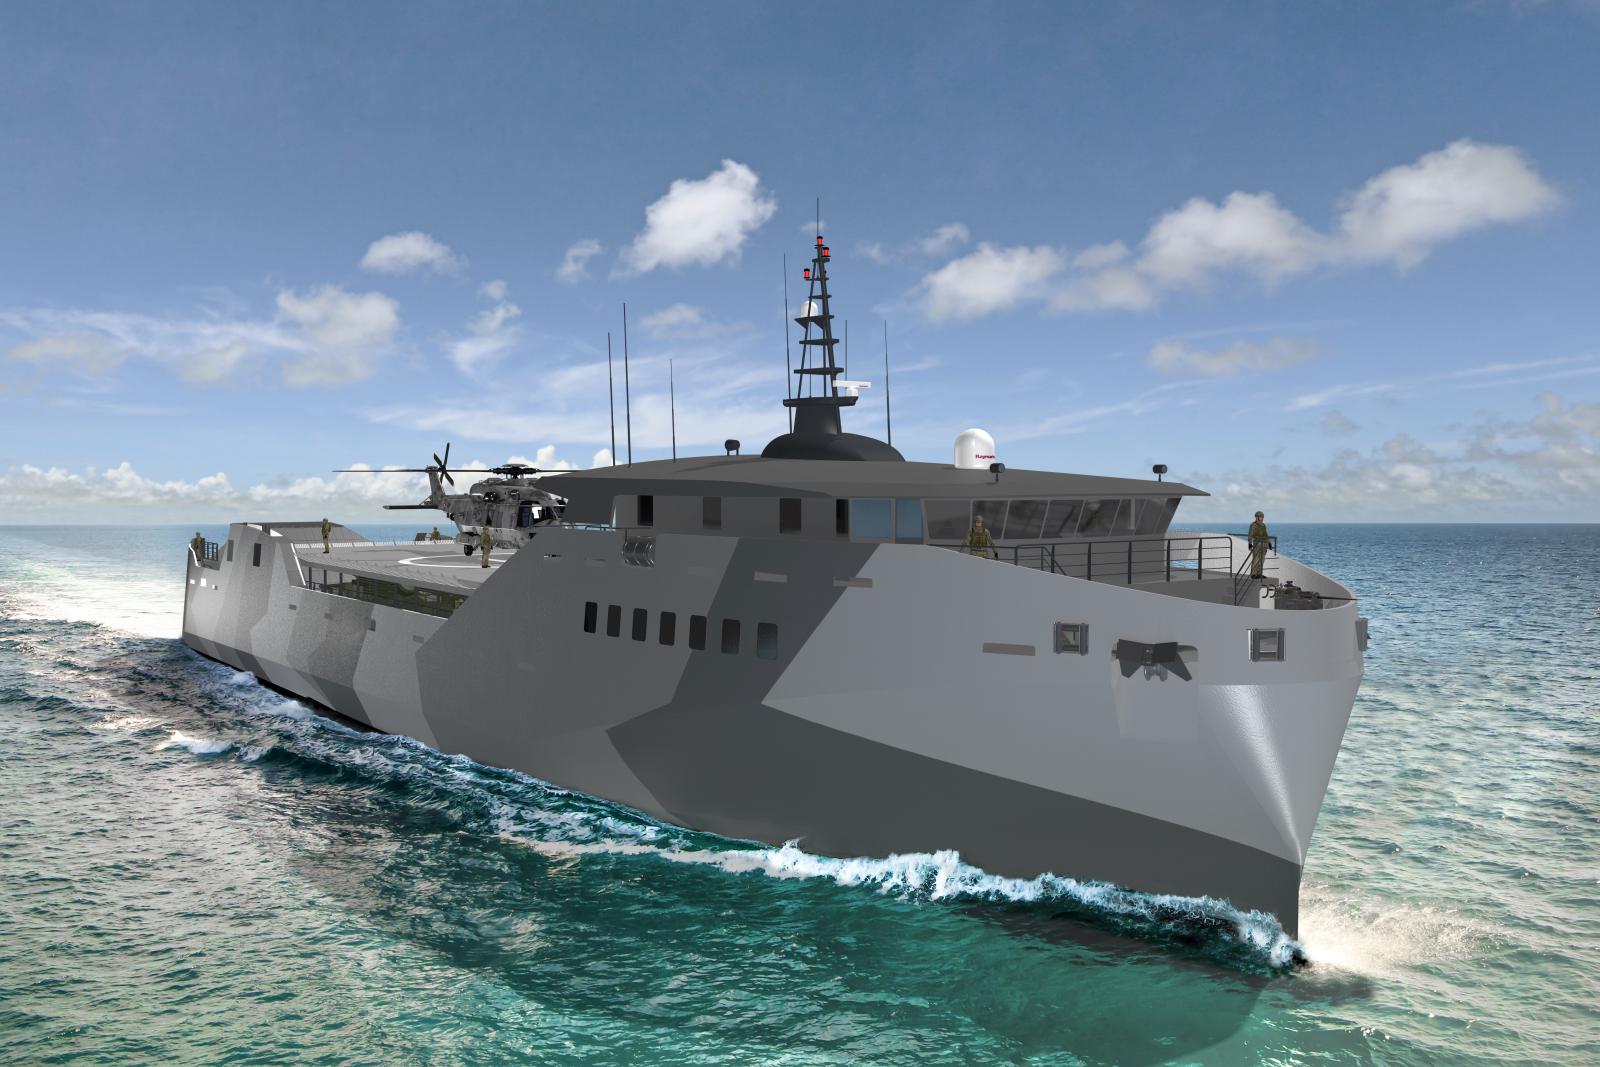 New Light Amphibious Warship Will be the U.S. Marine Corps' Workhorse